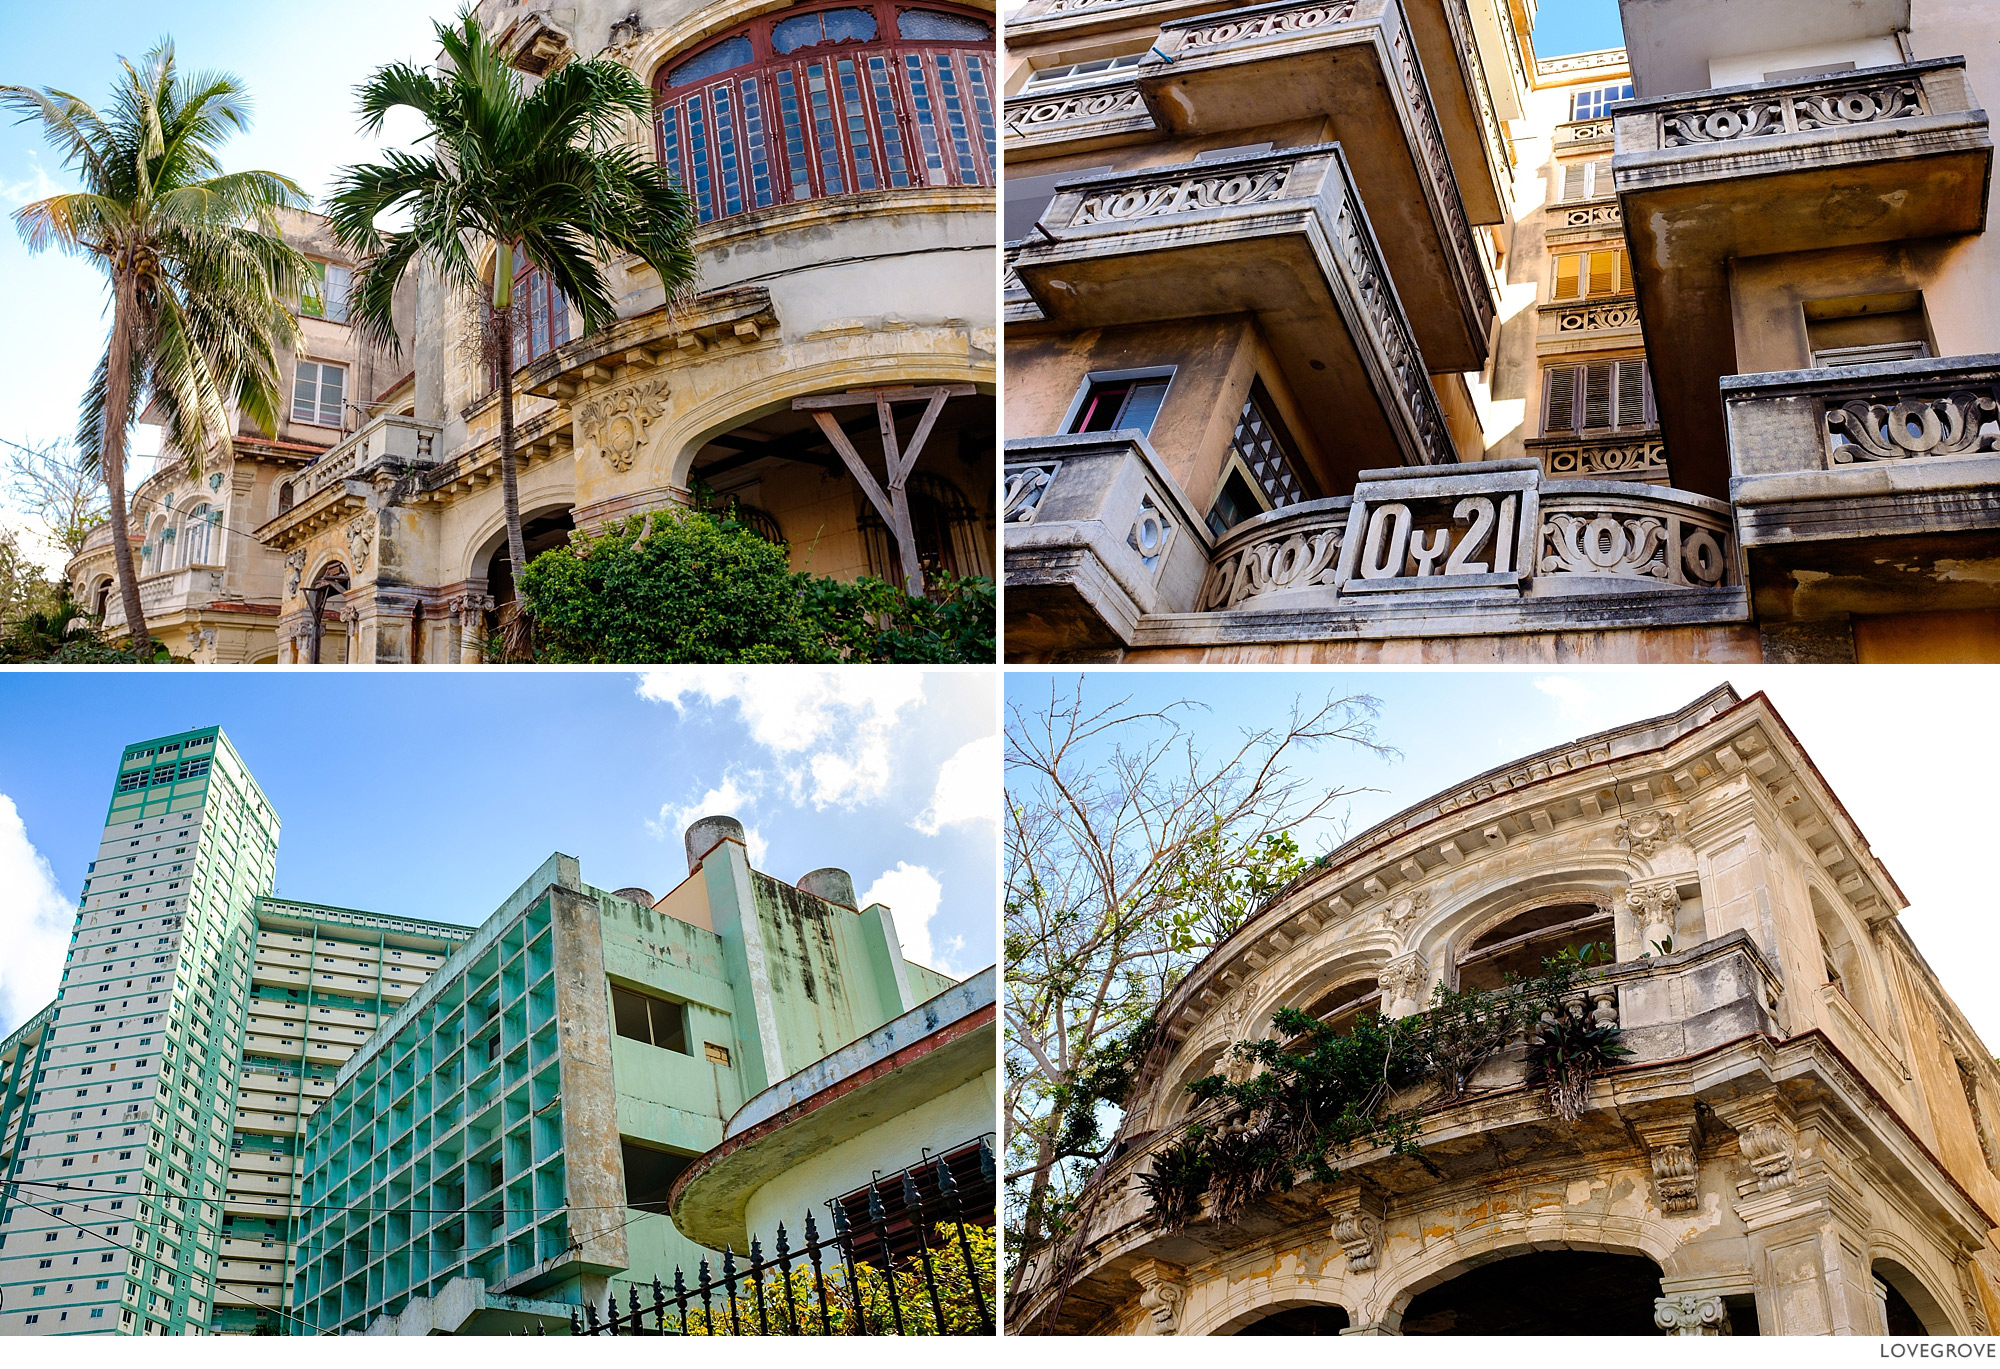 Architecture styles in Havana